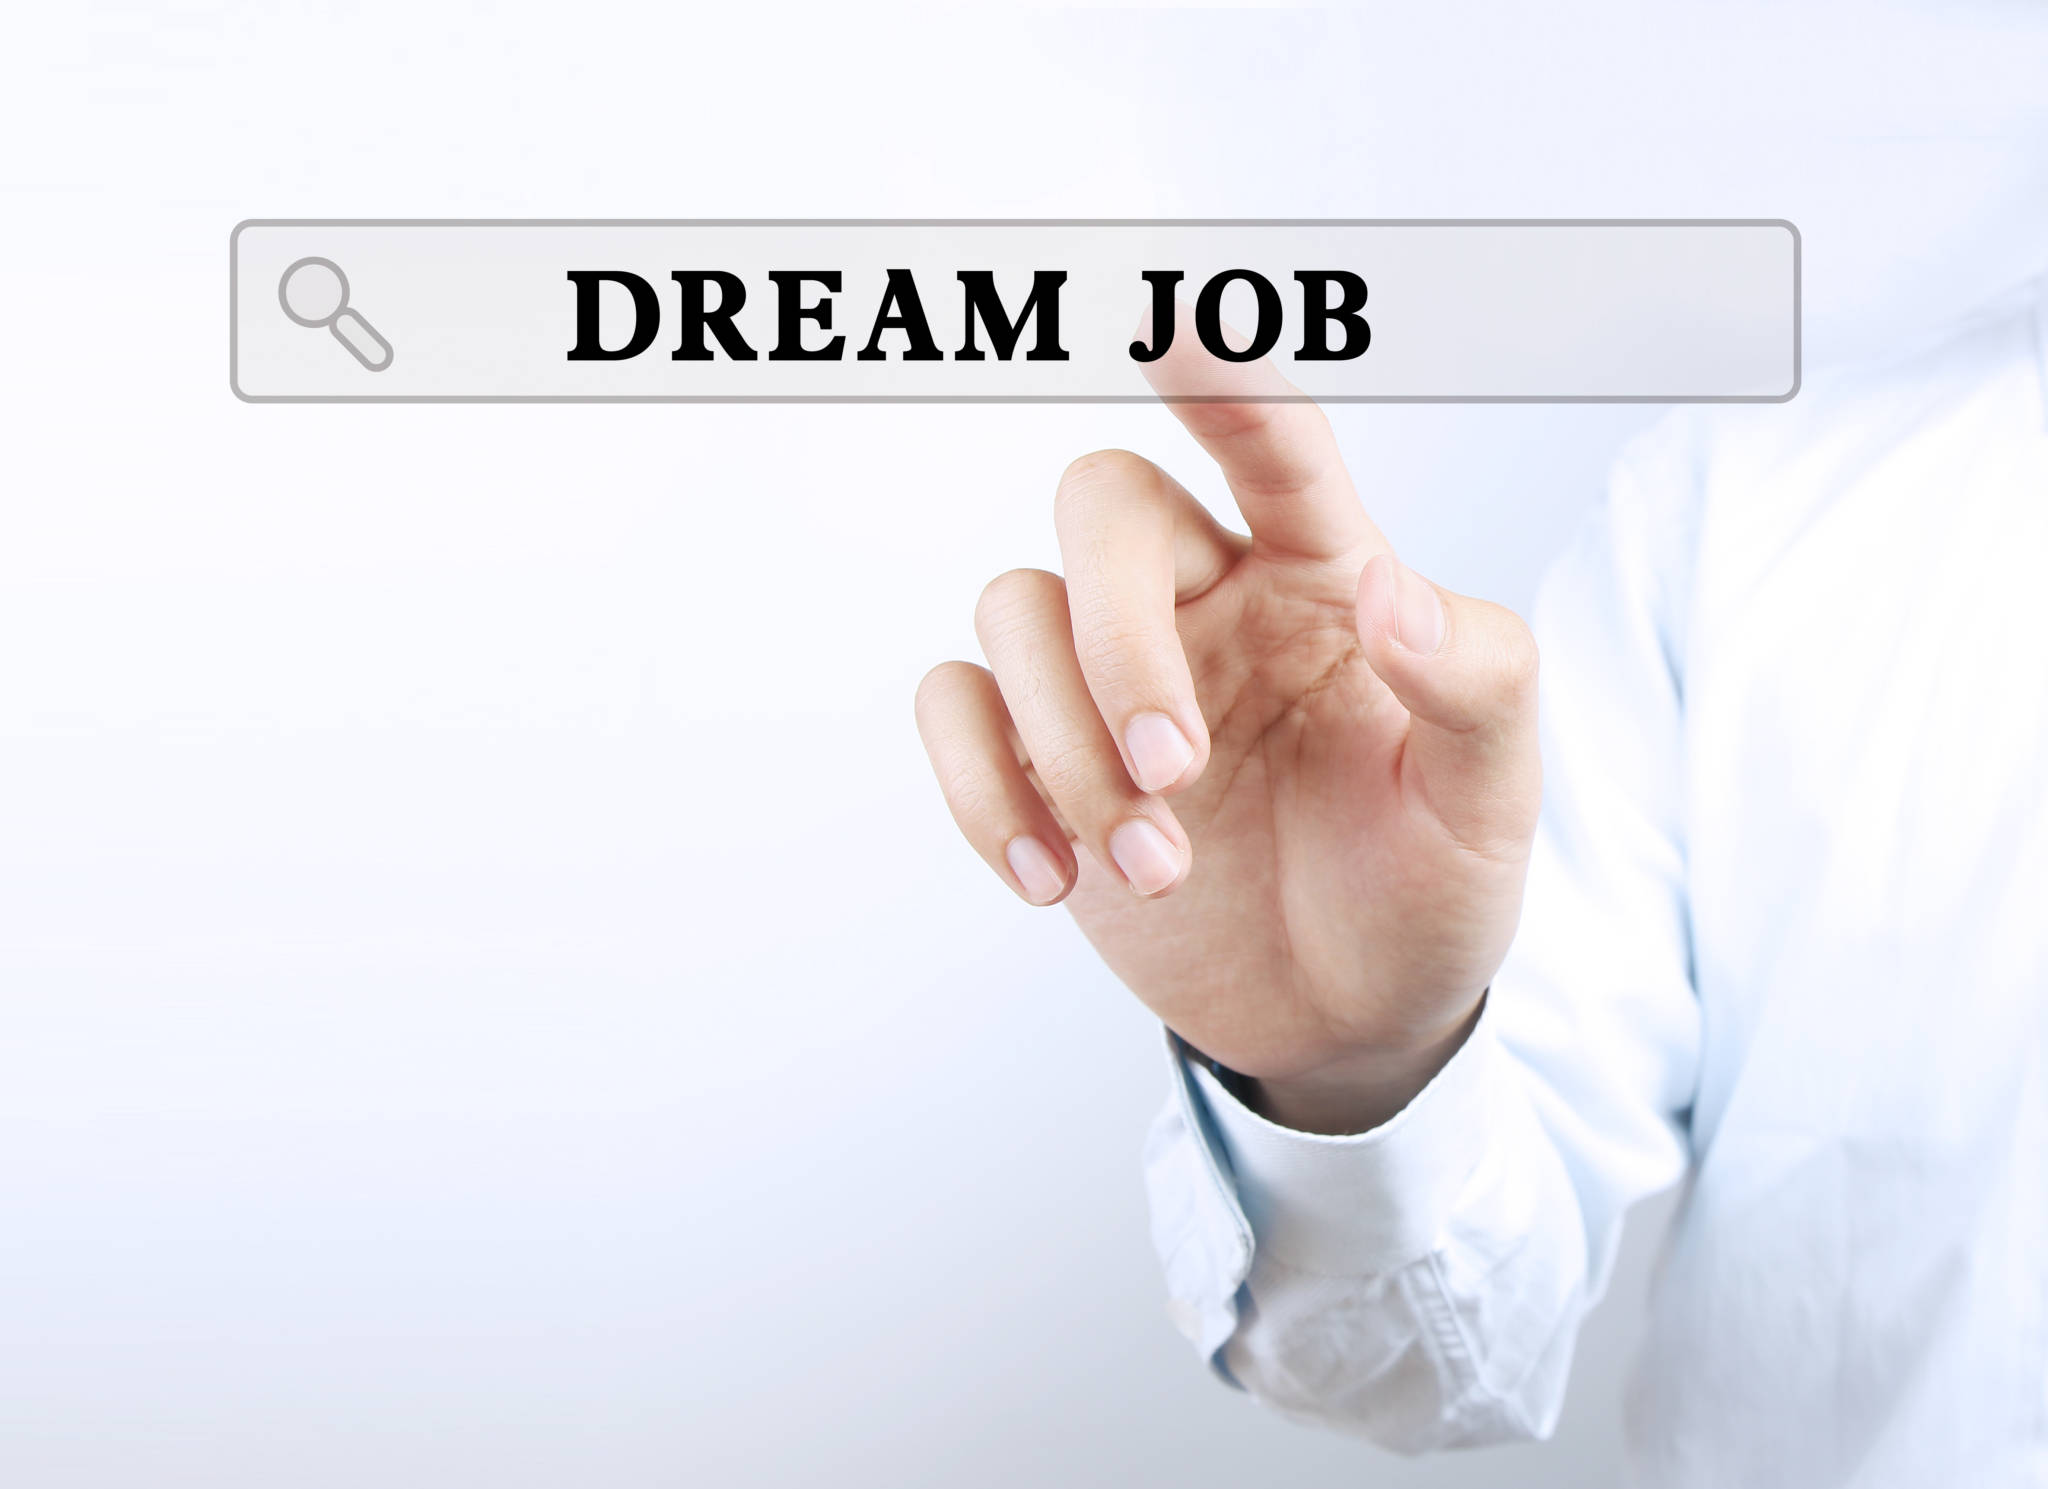 dream job career - be intentional